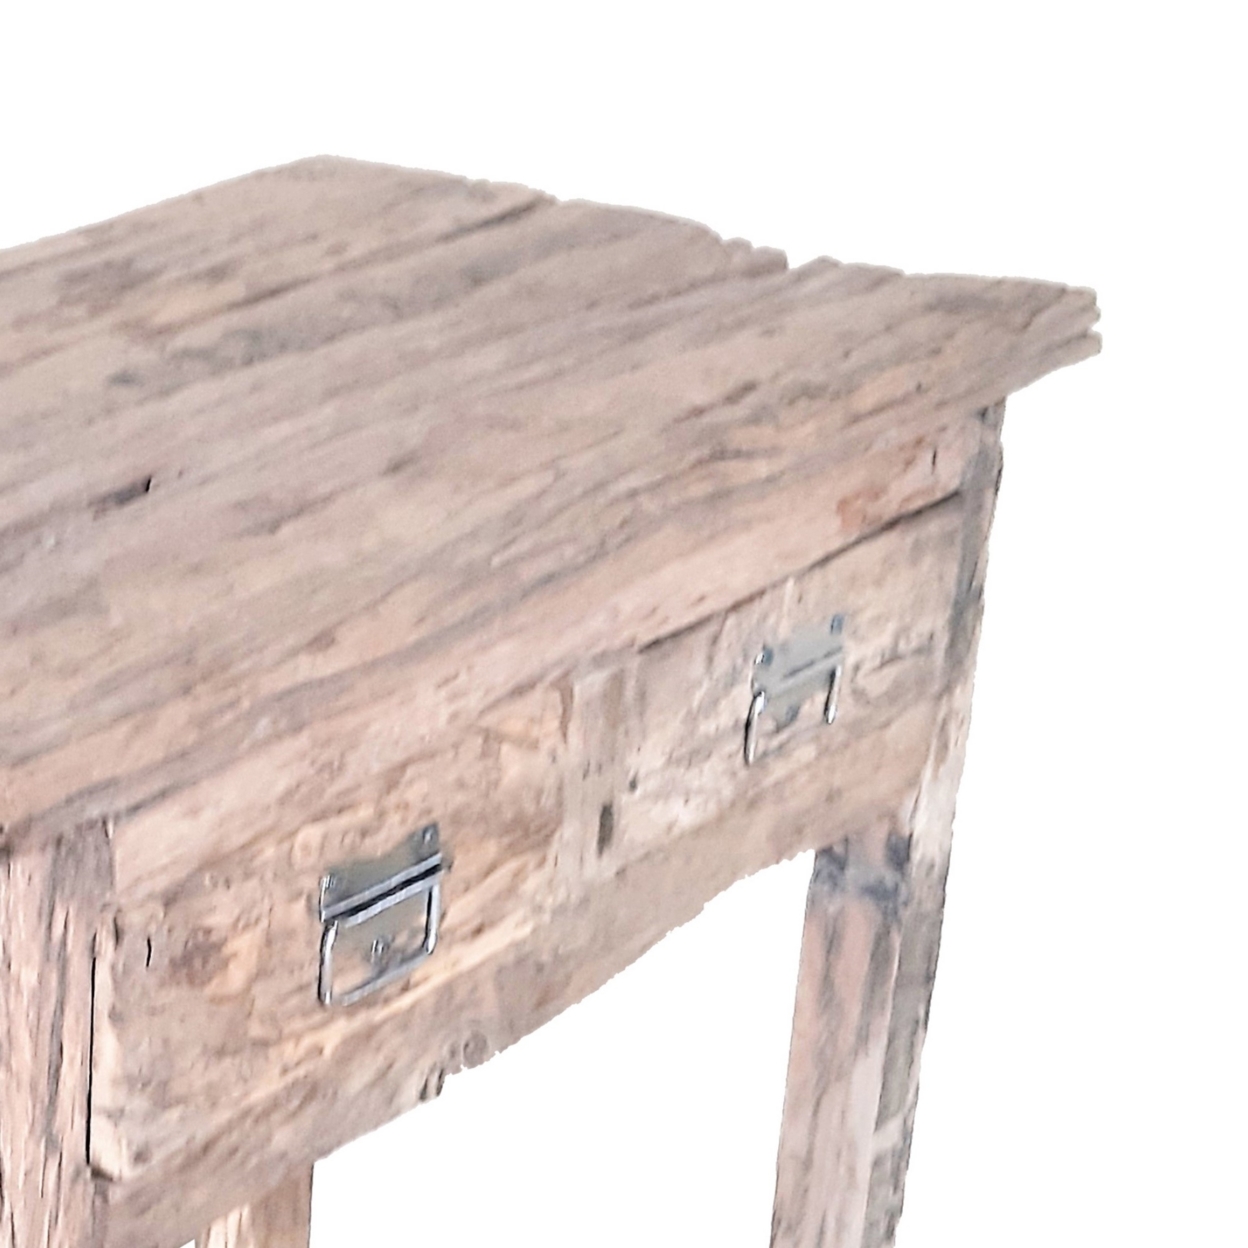 32 Inch Rustic Kitchen Island Table, 2 Drawers, Distressed White Wood- Saltoro Sherpi